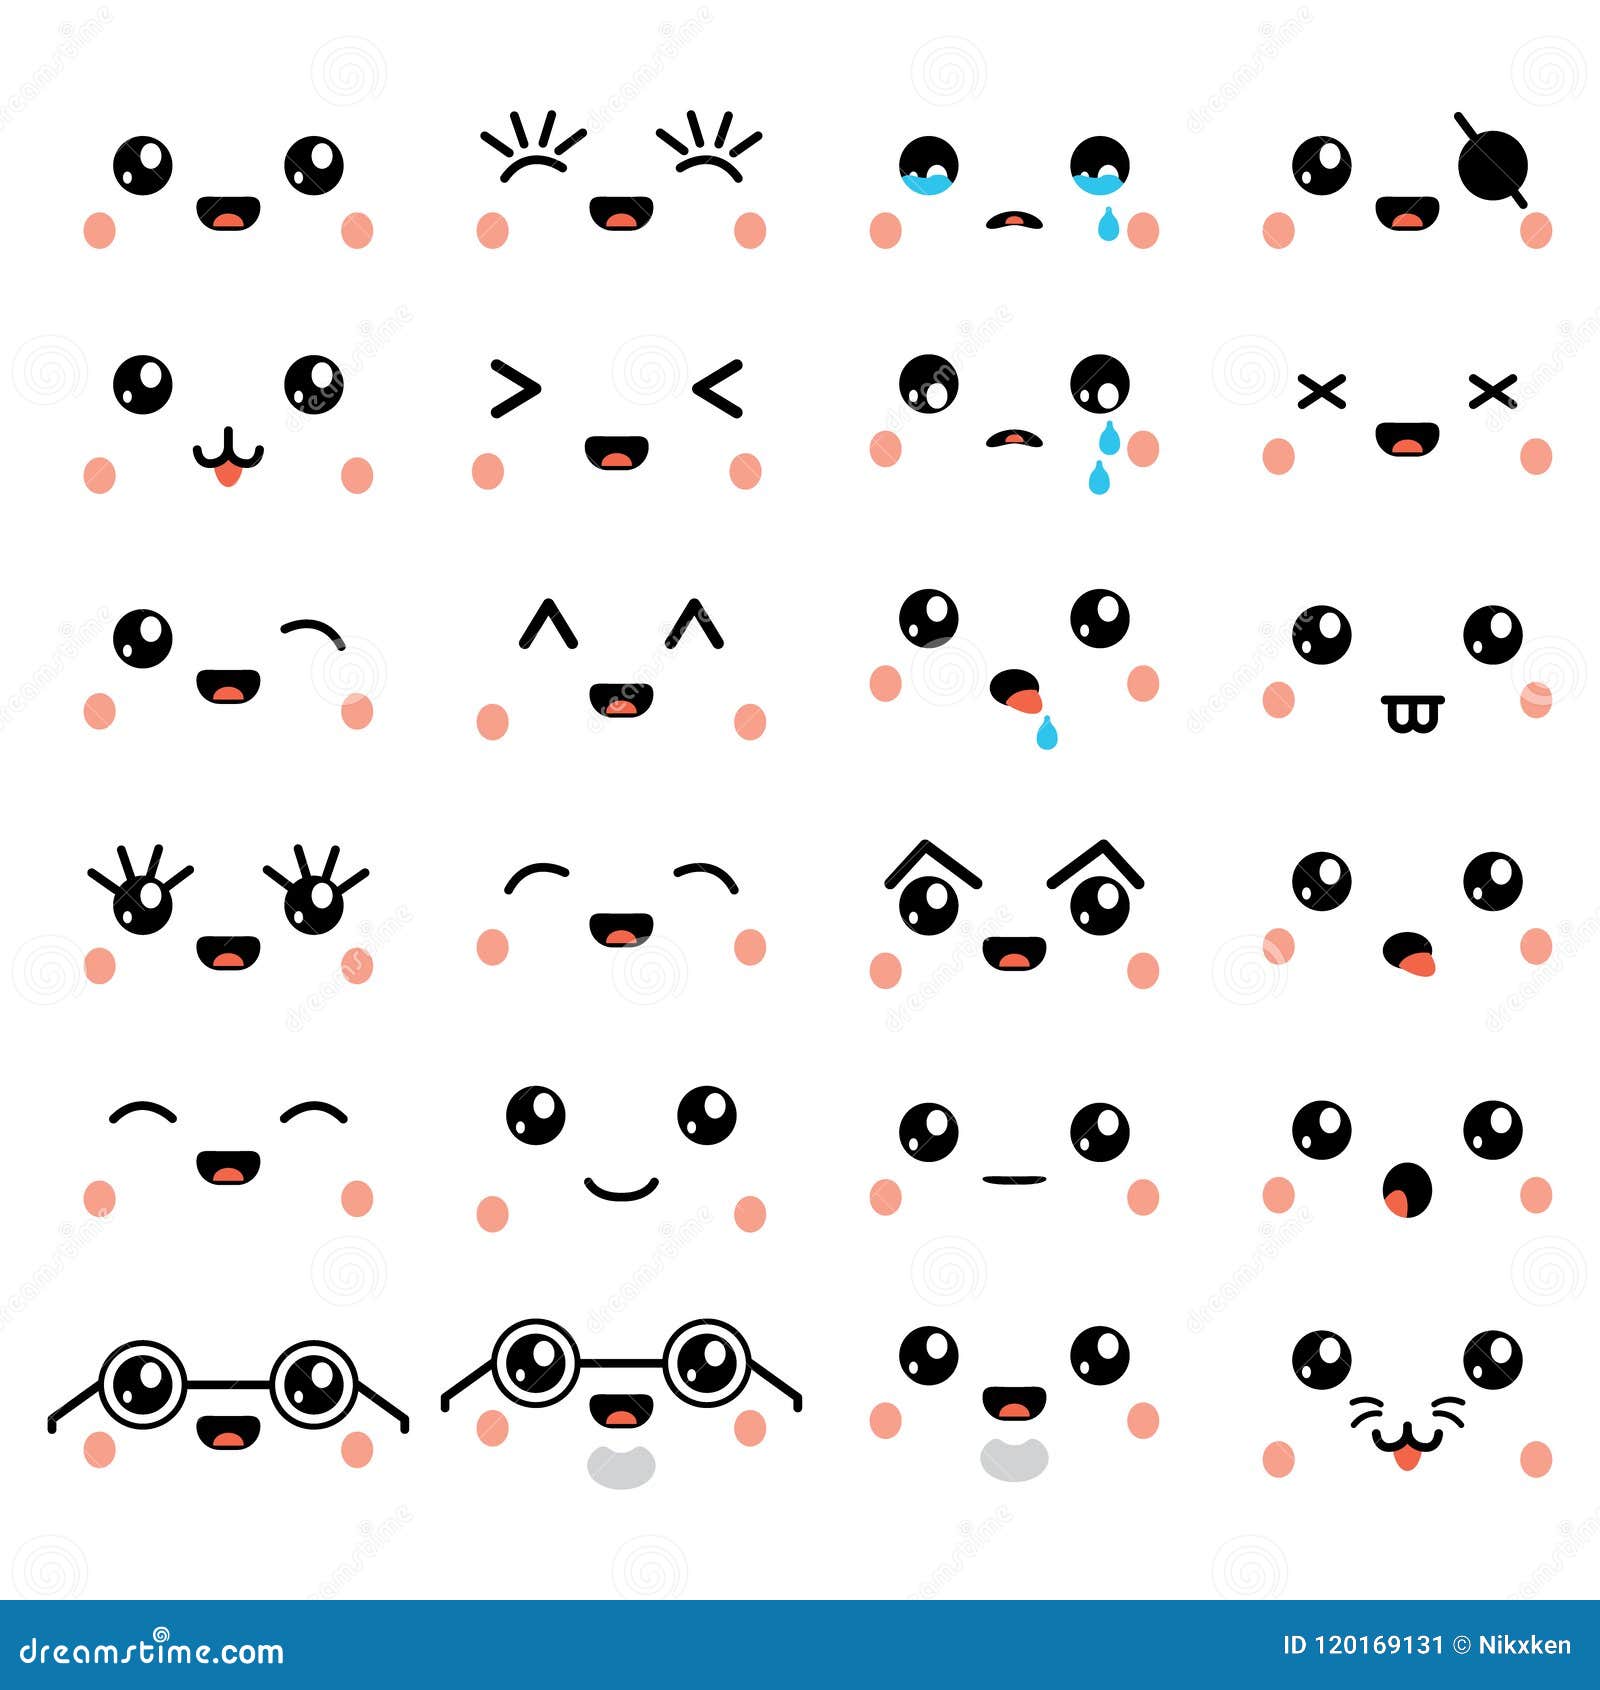 Kawaii or Cute Emoticon, Emoji and Face Icons Set. Vector Stock Vector ...